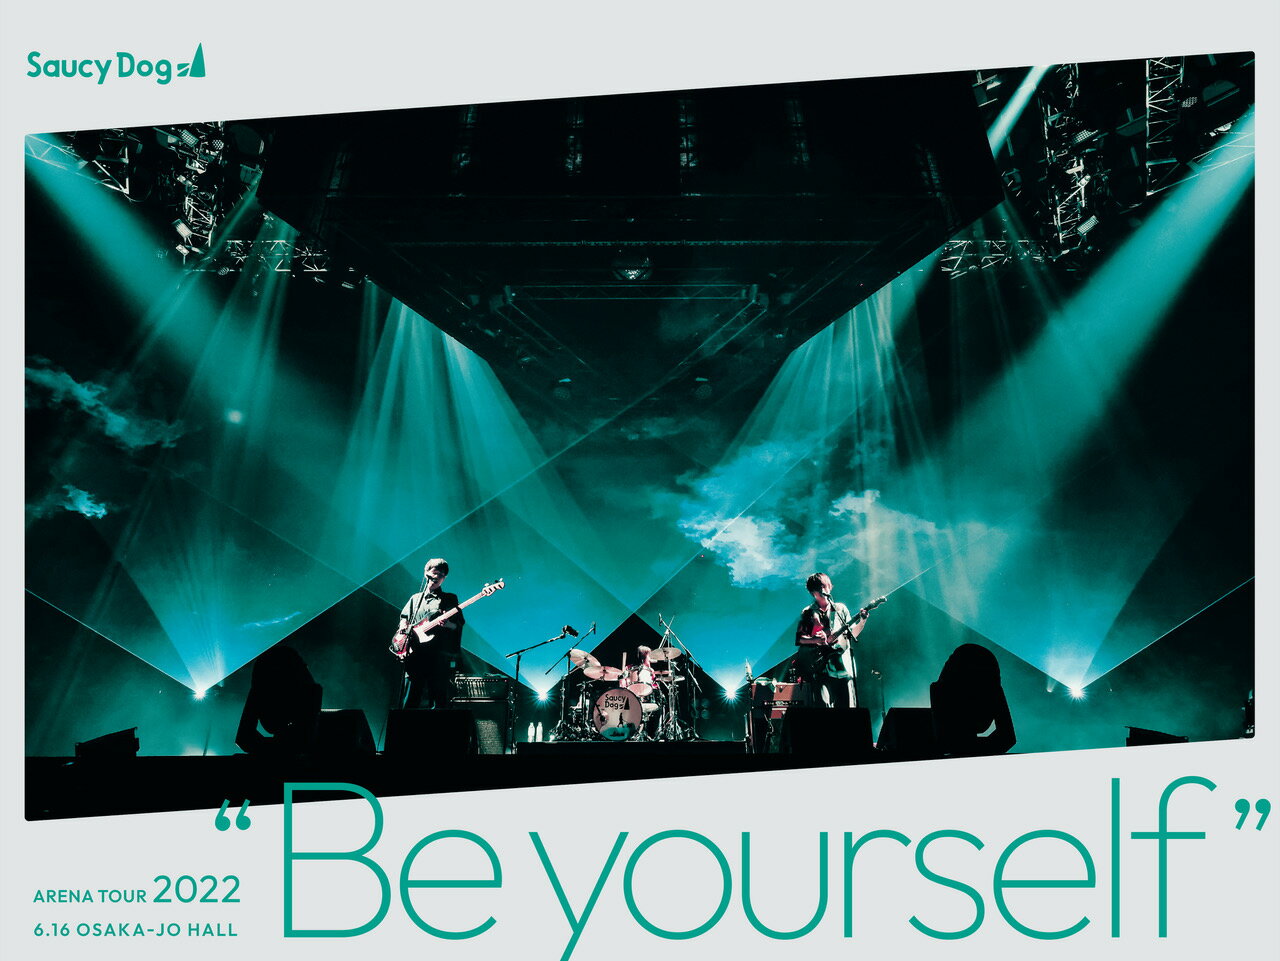 Saucy Dog ARENA TOUR 2022 “Be yourself” 2022.6.16 大阪城ホール【Blu-ray】